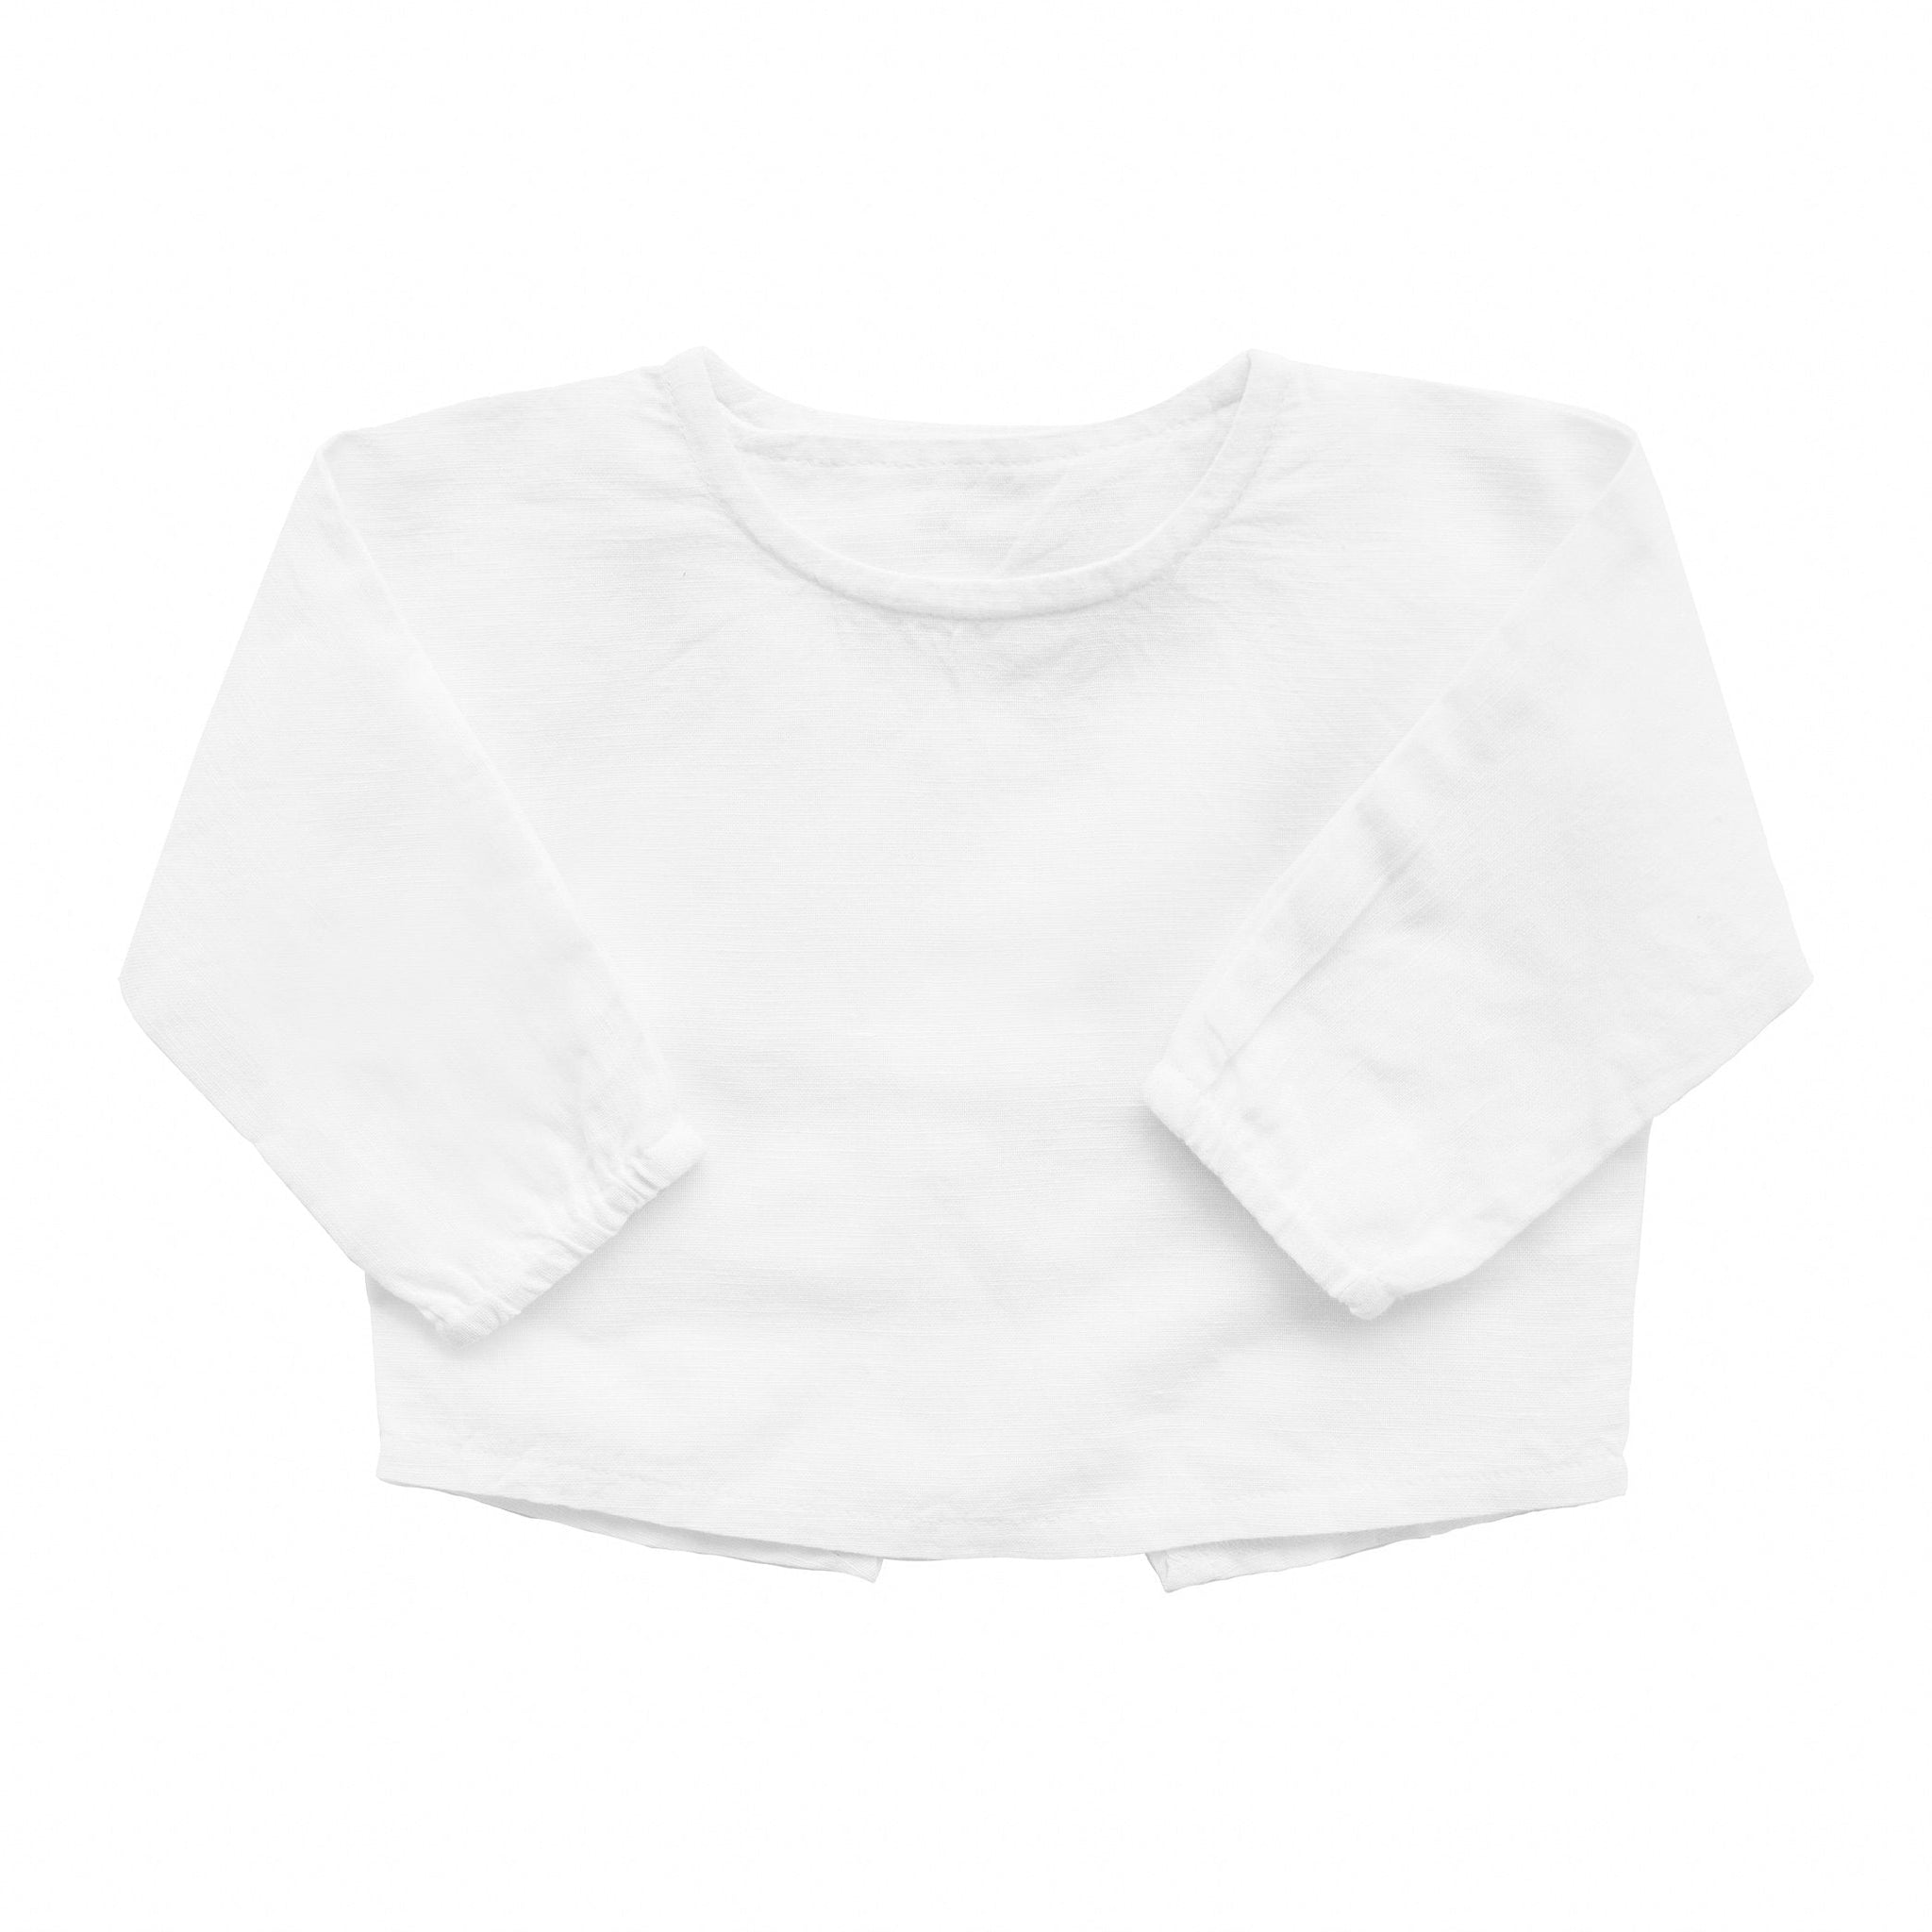 Double button shirt | white linen - HoneyBug 